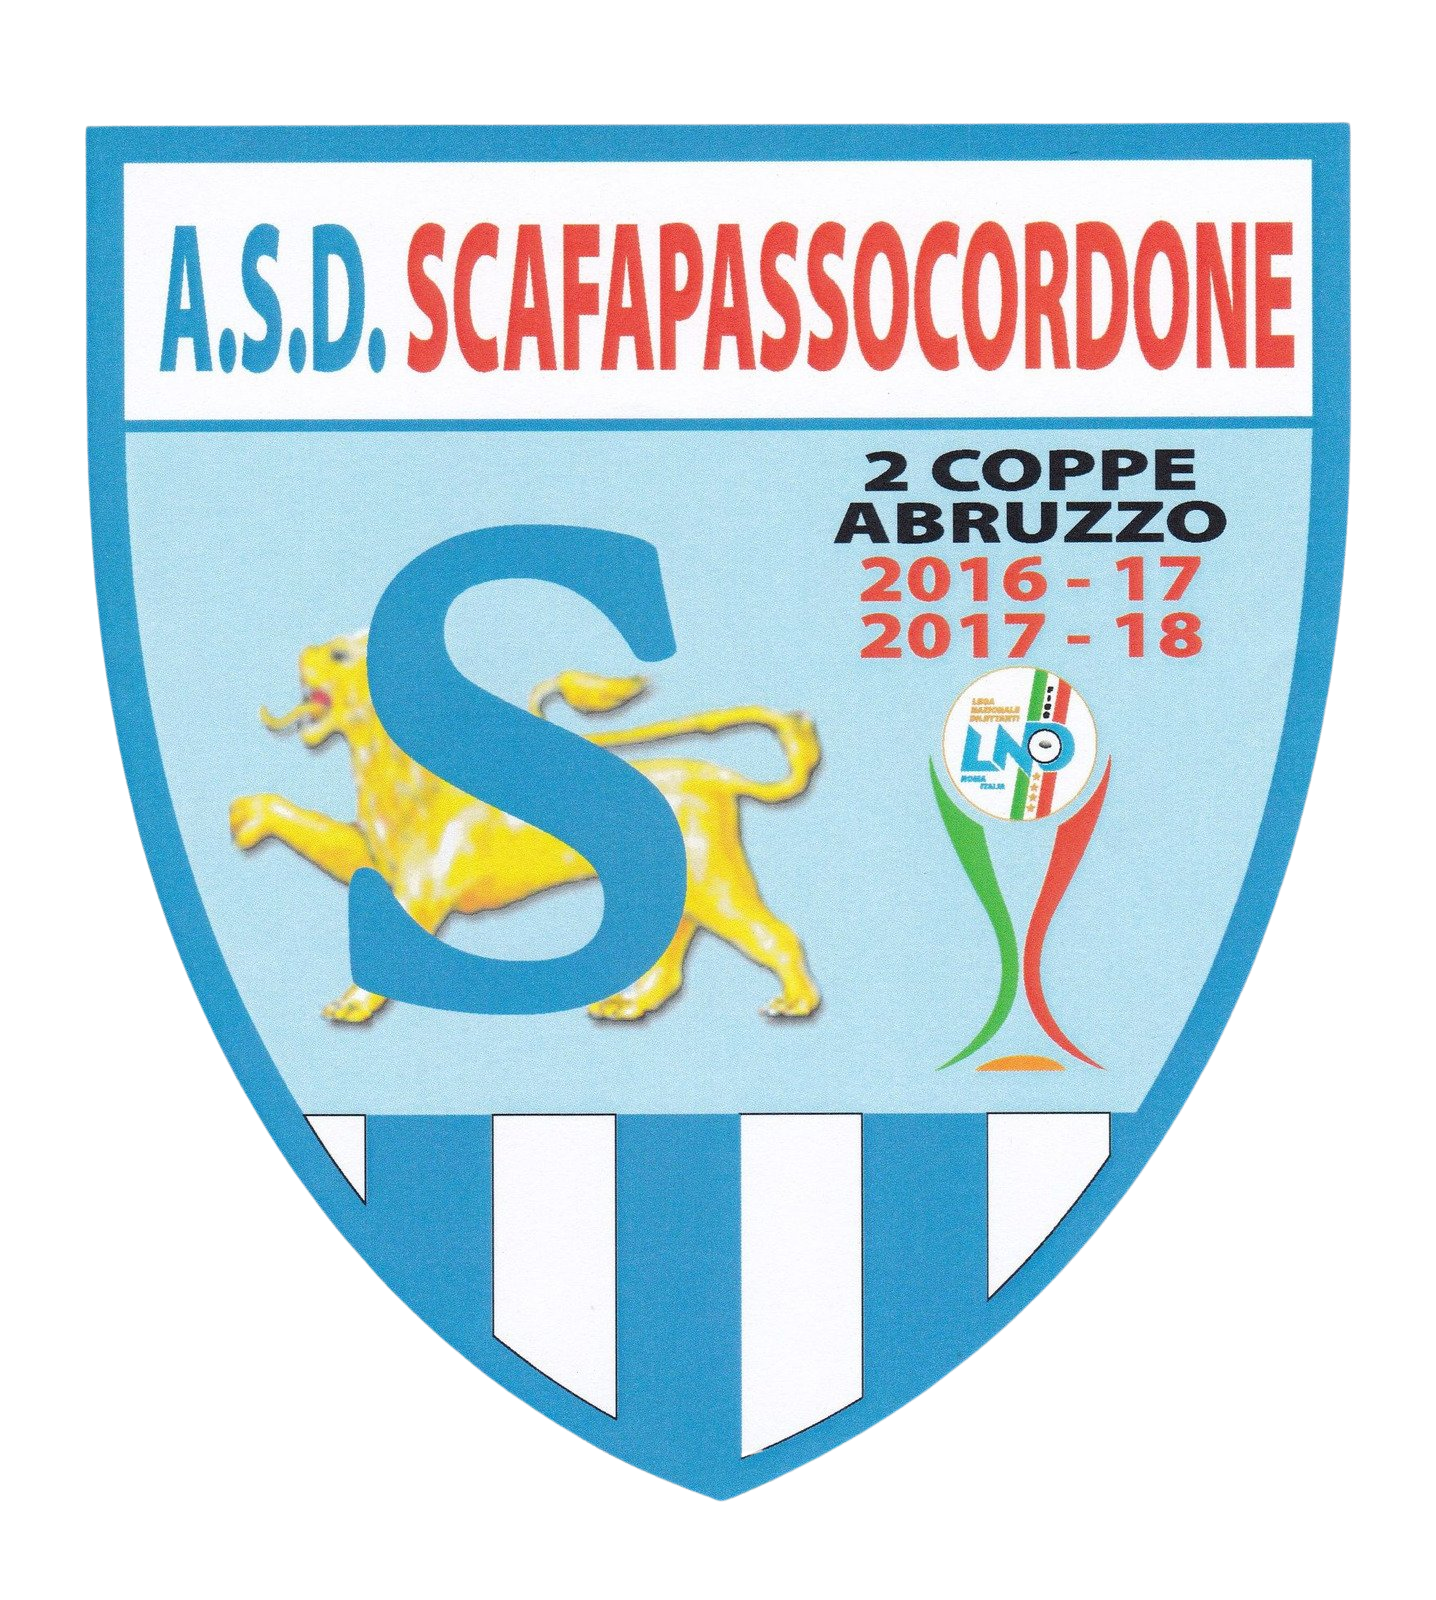 ASD Scafapassocordone